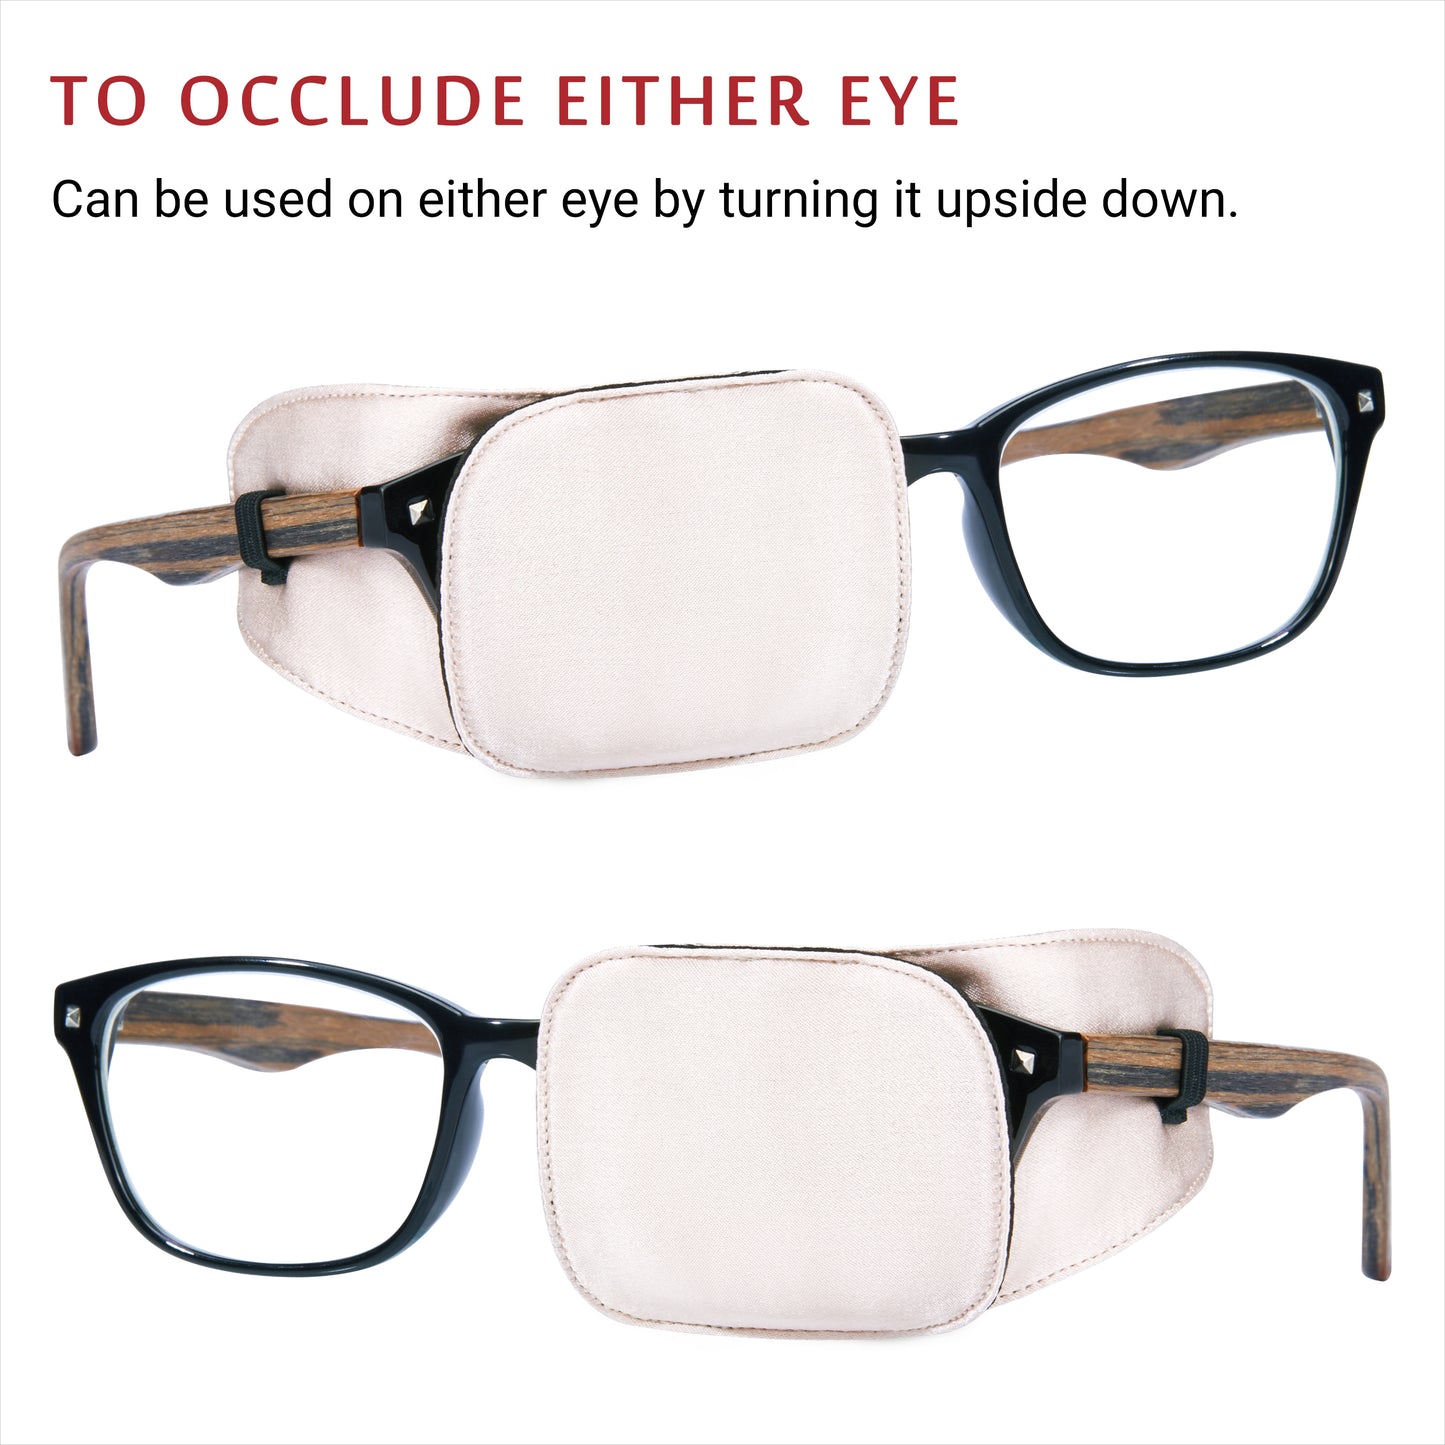 Silk Eye Patch for Glasses (Medium, Creamy Beige)